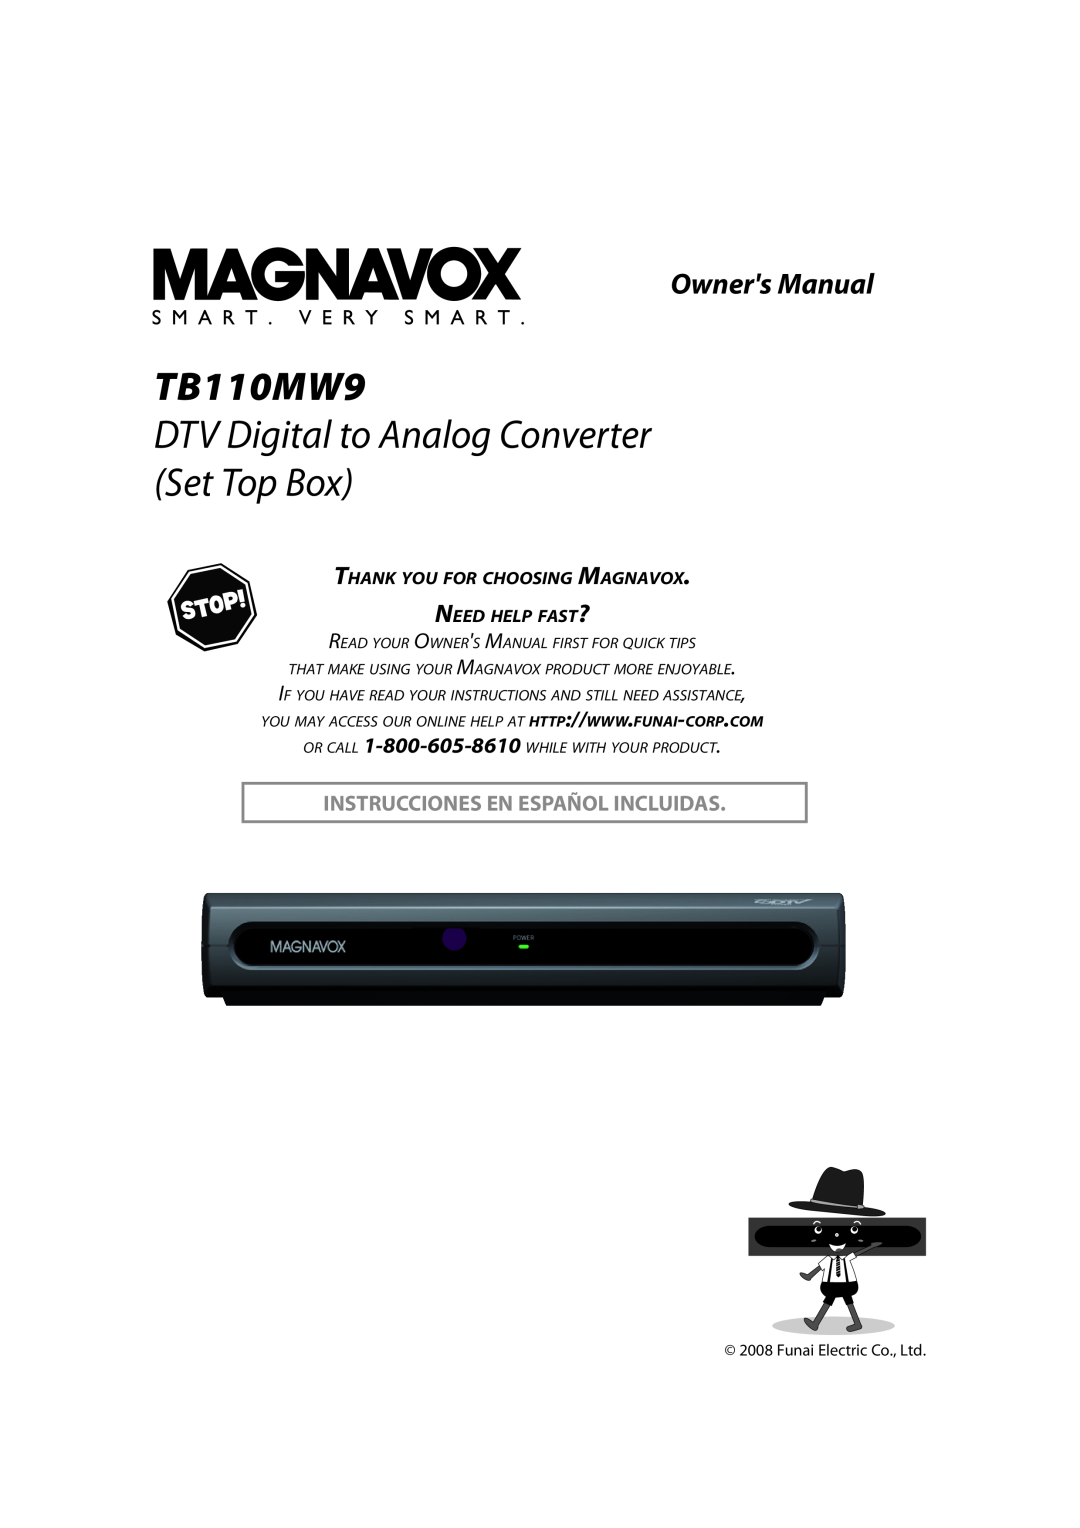 Magnavox TB110MW9 owner manual Instrucciones En Español Incluidas, DTV Digital to Analog Converter Set Top Box 